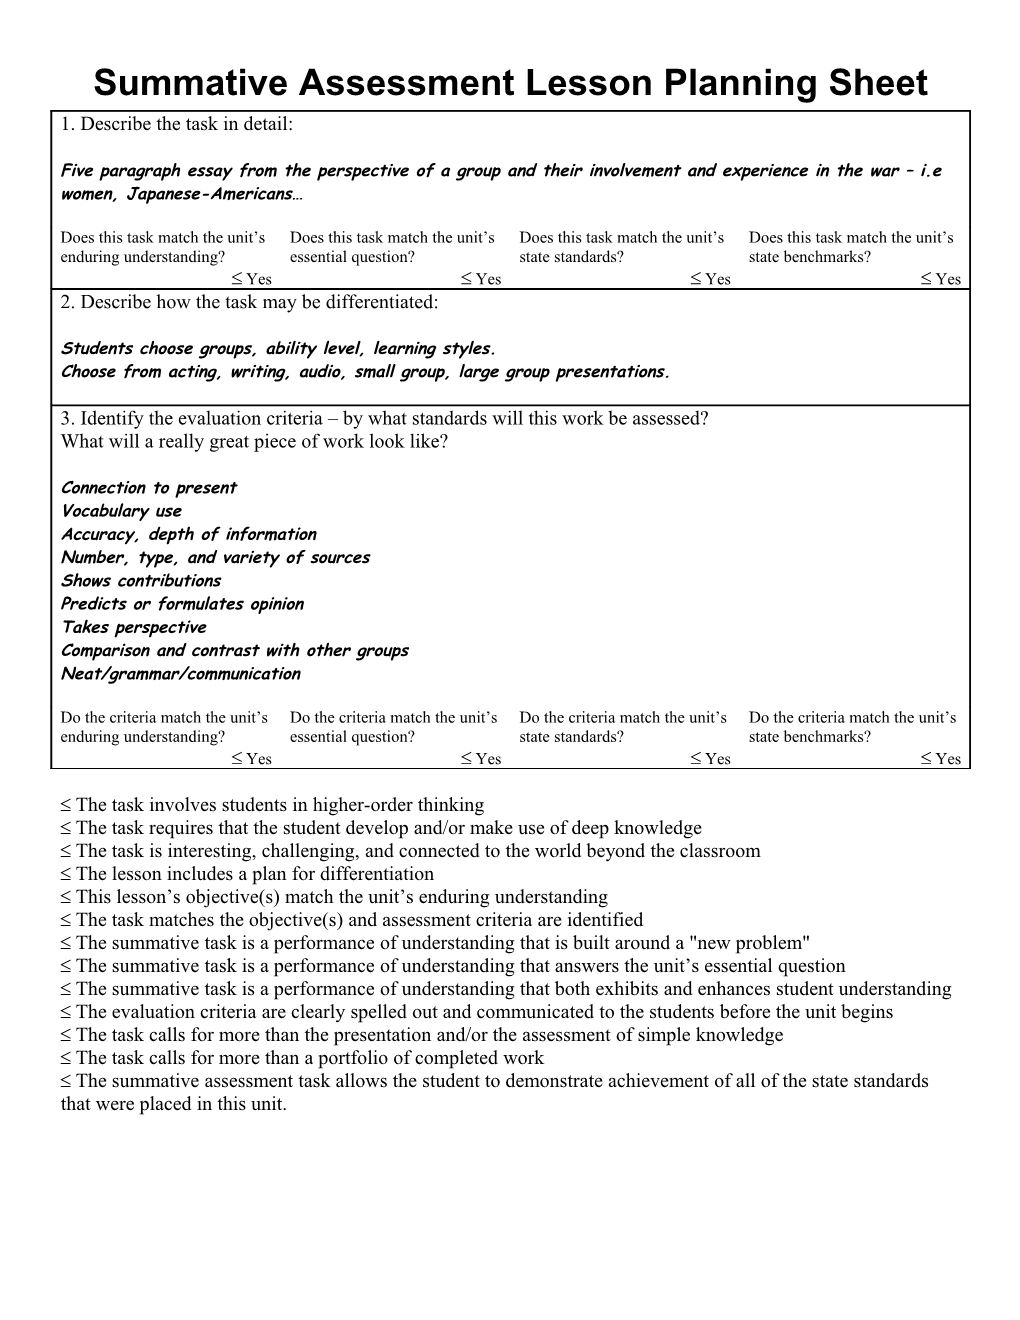 Summative Assessment Lesson Planning Sheet s1